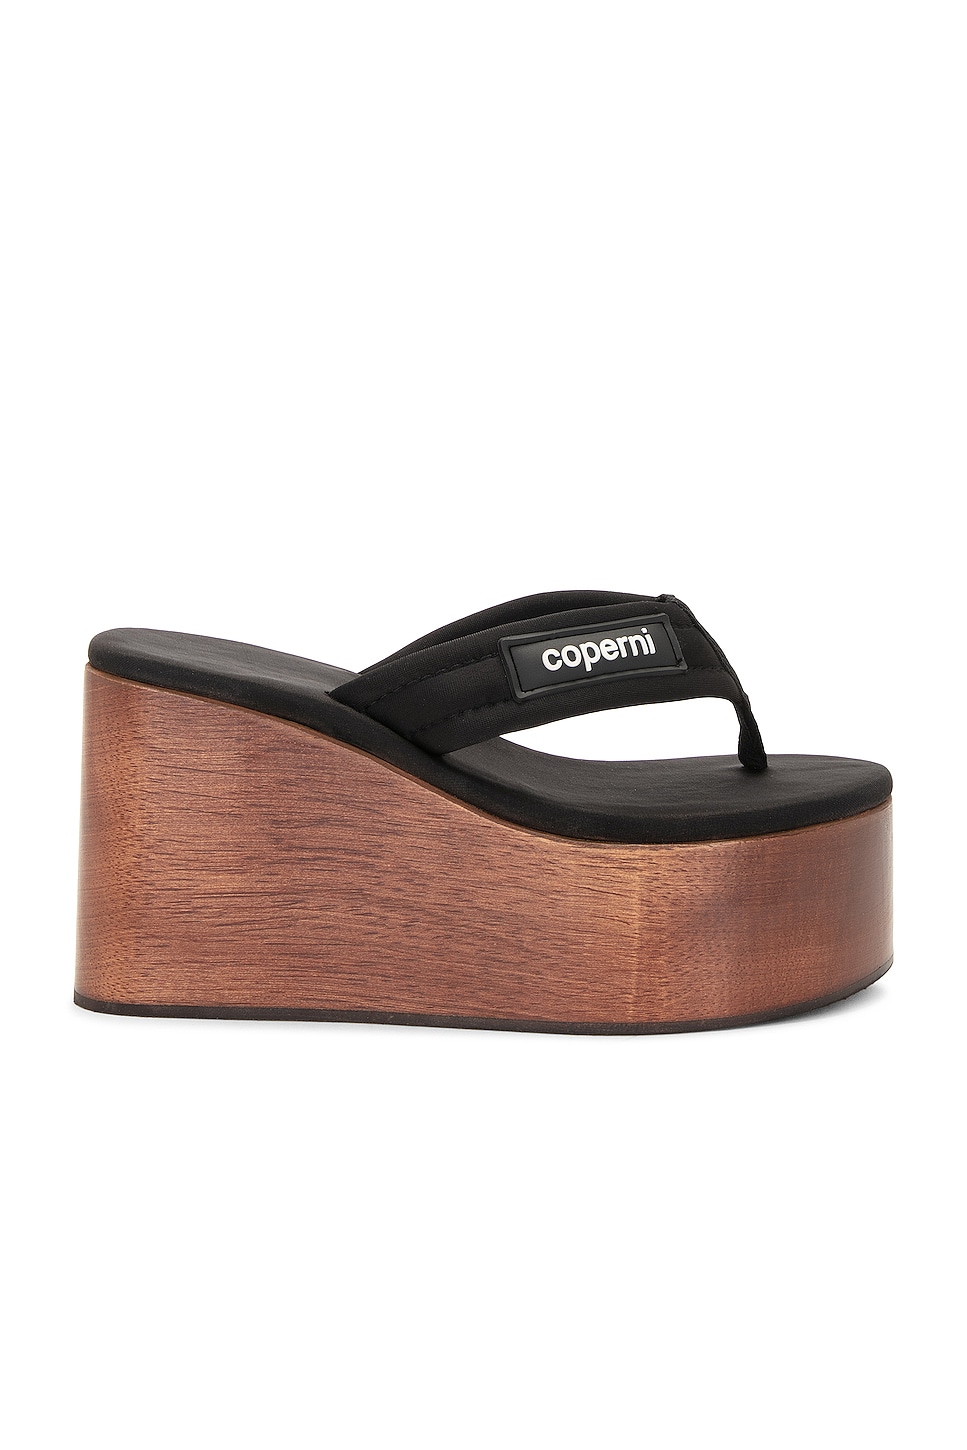 Image 1 of Coperni Wooden Branded Wedge Sandal in Black & Brown